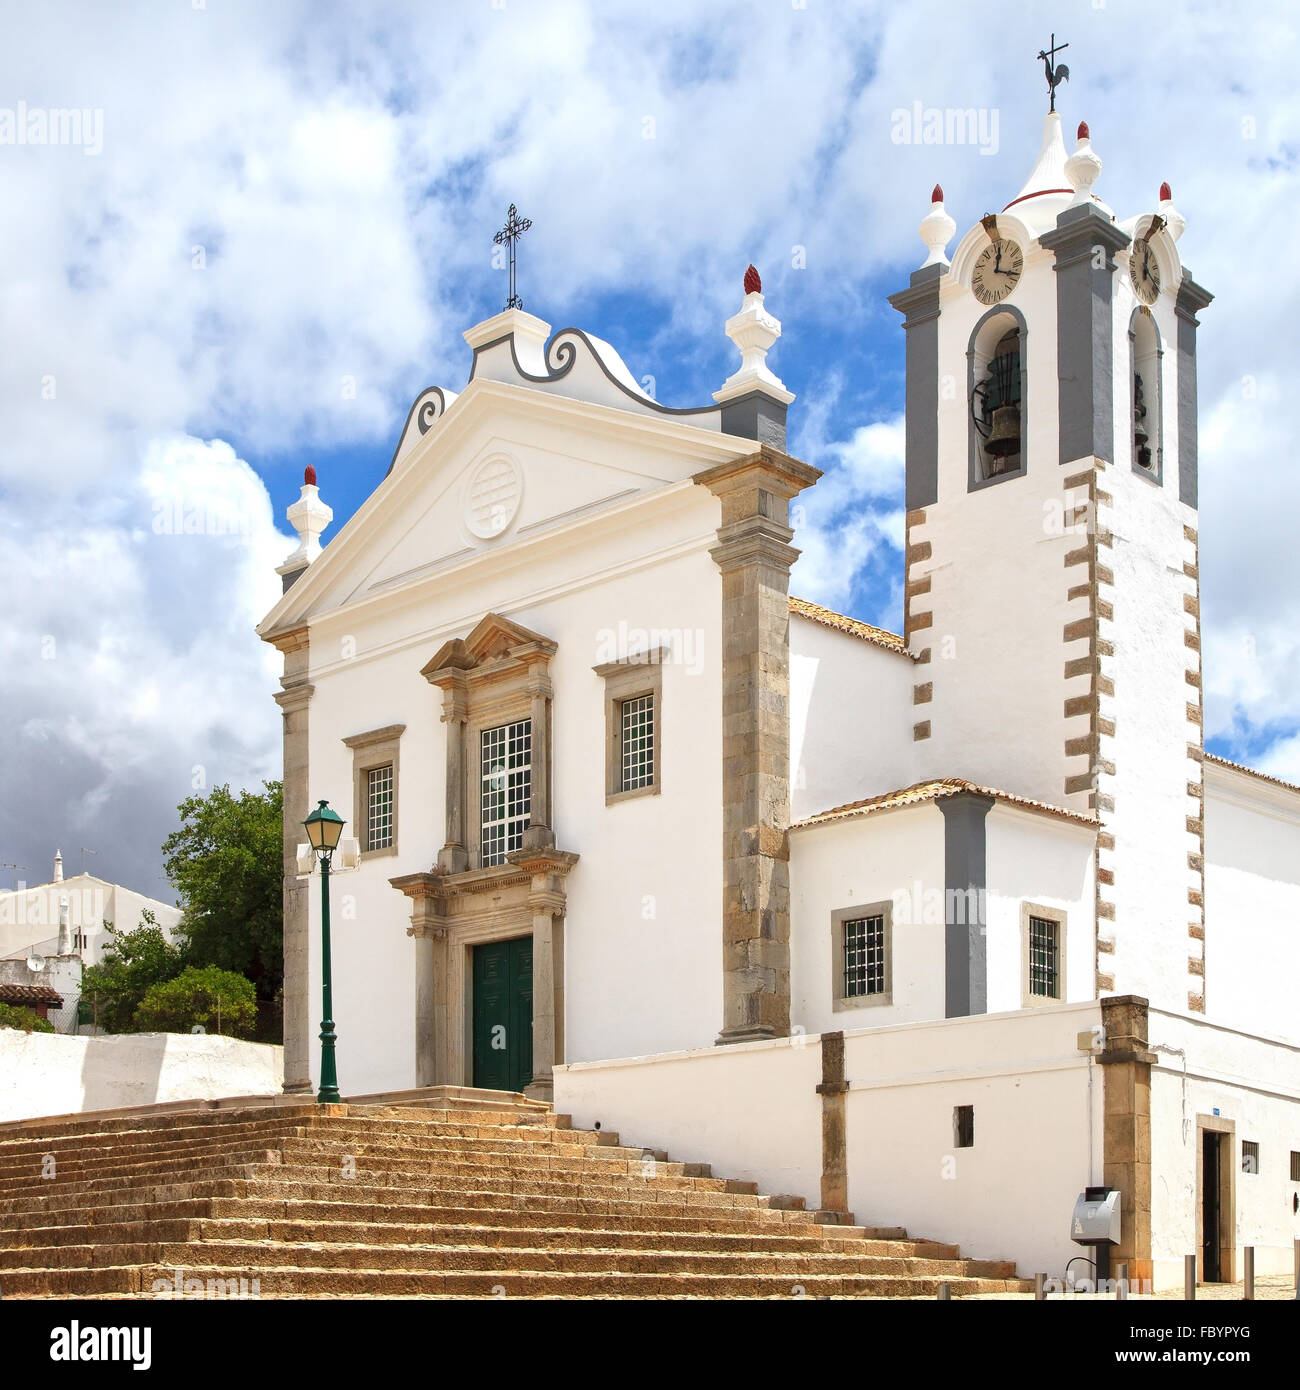 Chiesa portoghese landmark Igreja de Sao Martinho de Estoi come noto come Matriz de Estoi, provincia di Faro Algarve Portogallo Foto Stock